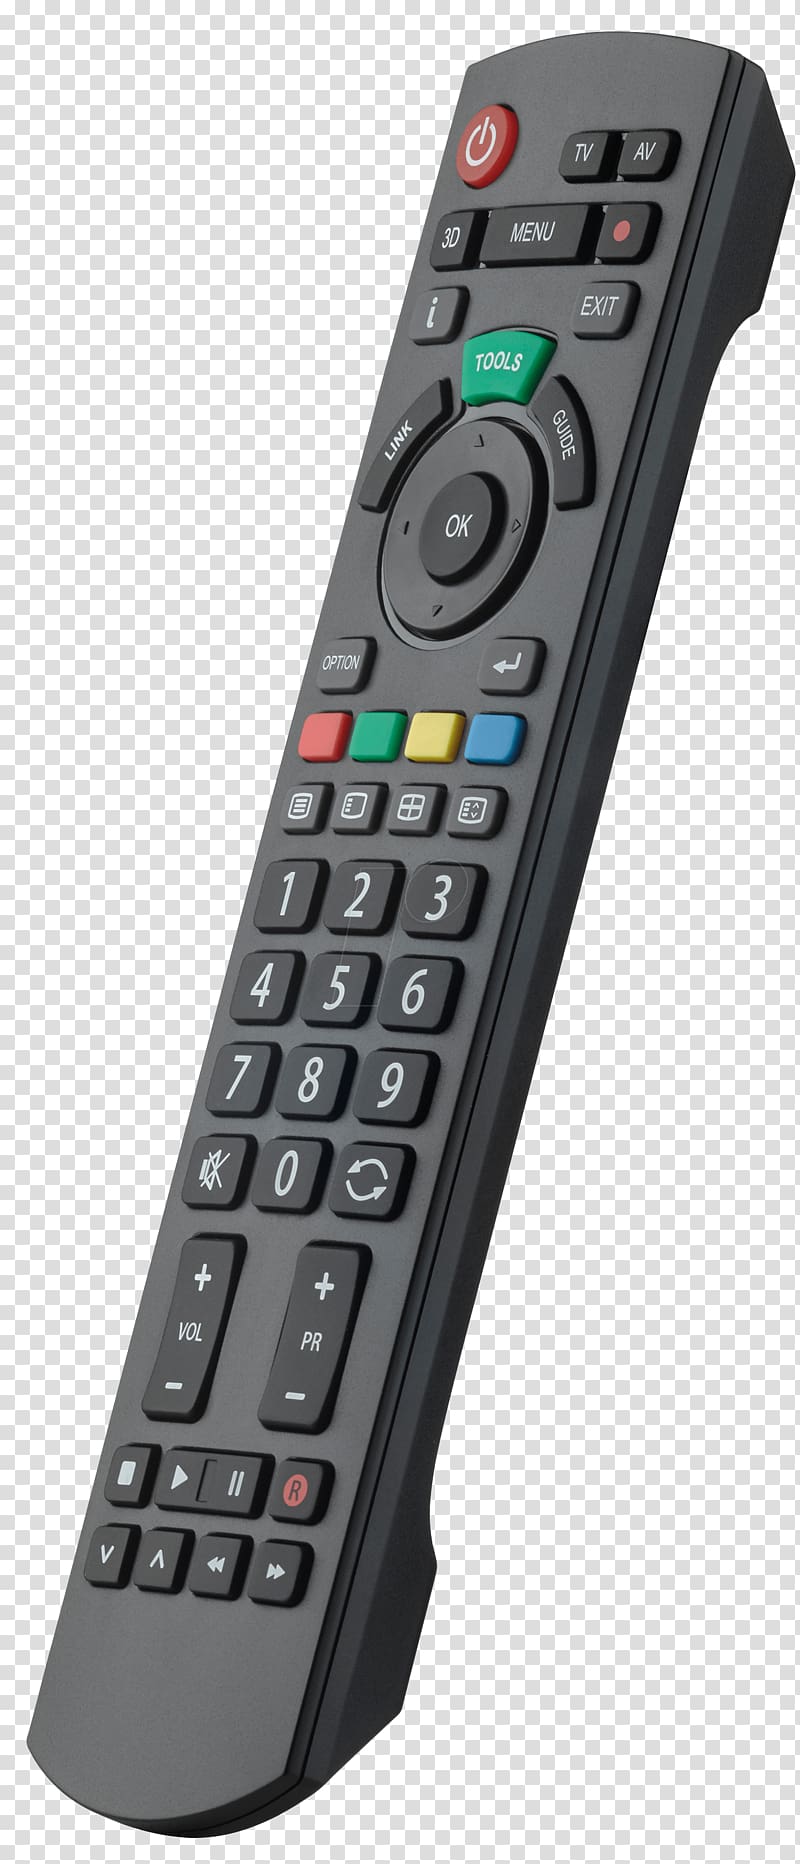 Remote Controls Television set Panasonic Philips, tv remote control transparent background PNG clipart